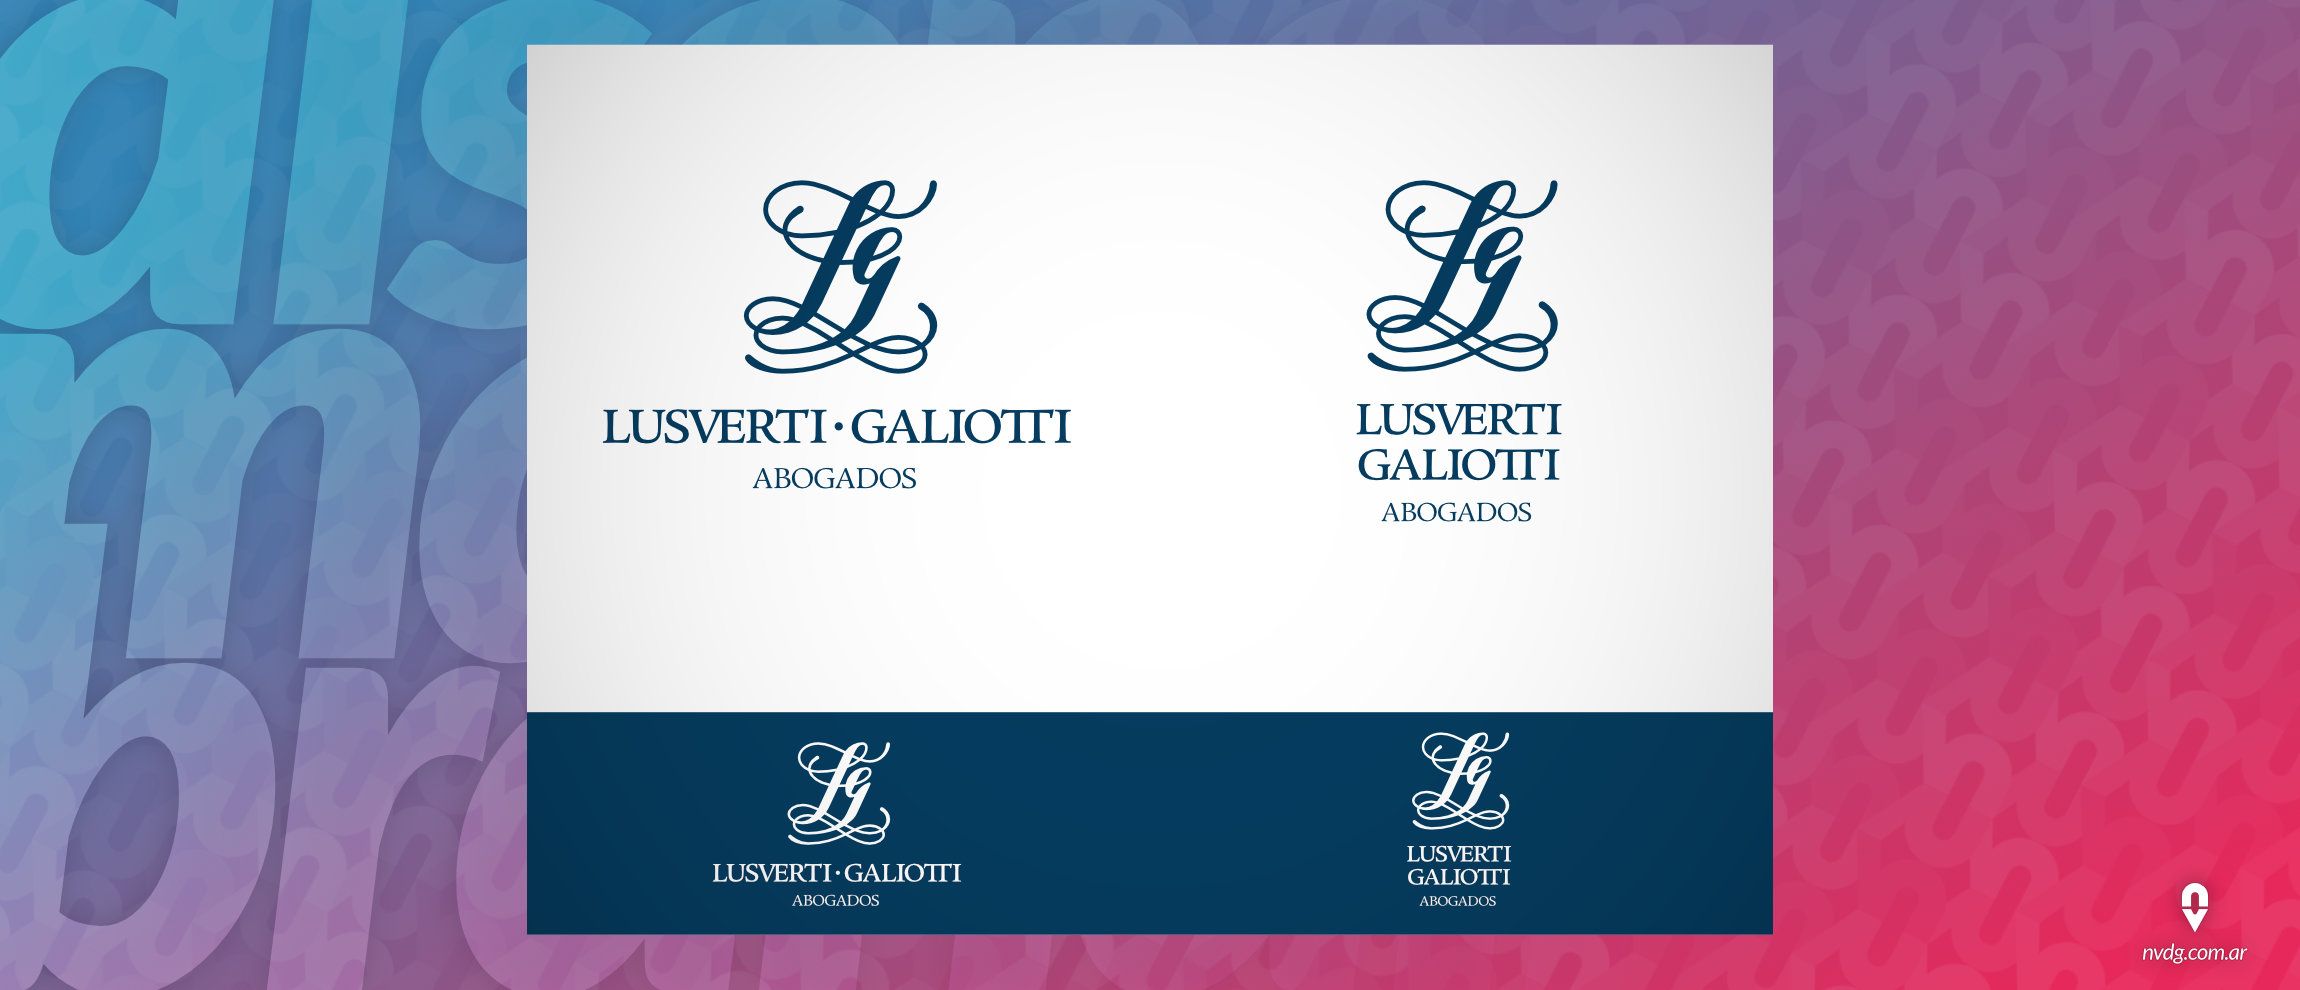 imagotipo-lusventri-Galiotti-abogados-estudio-nv